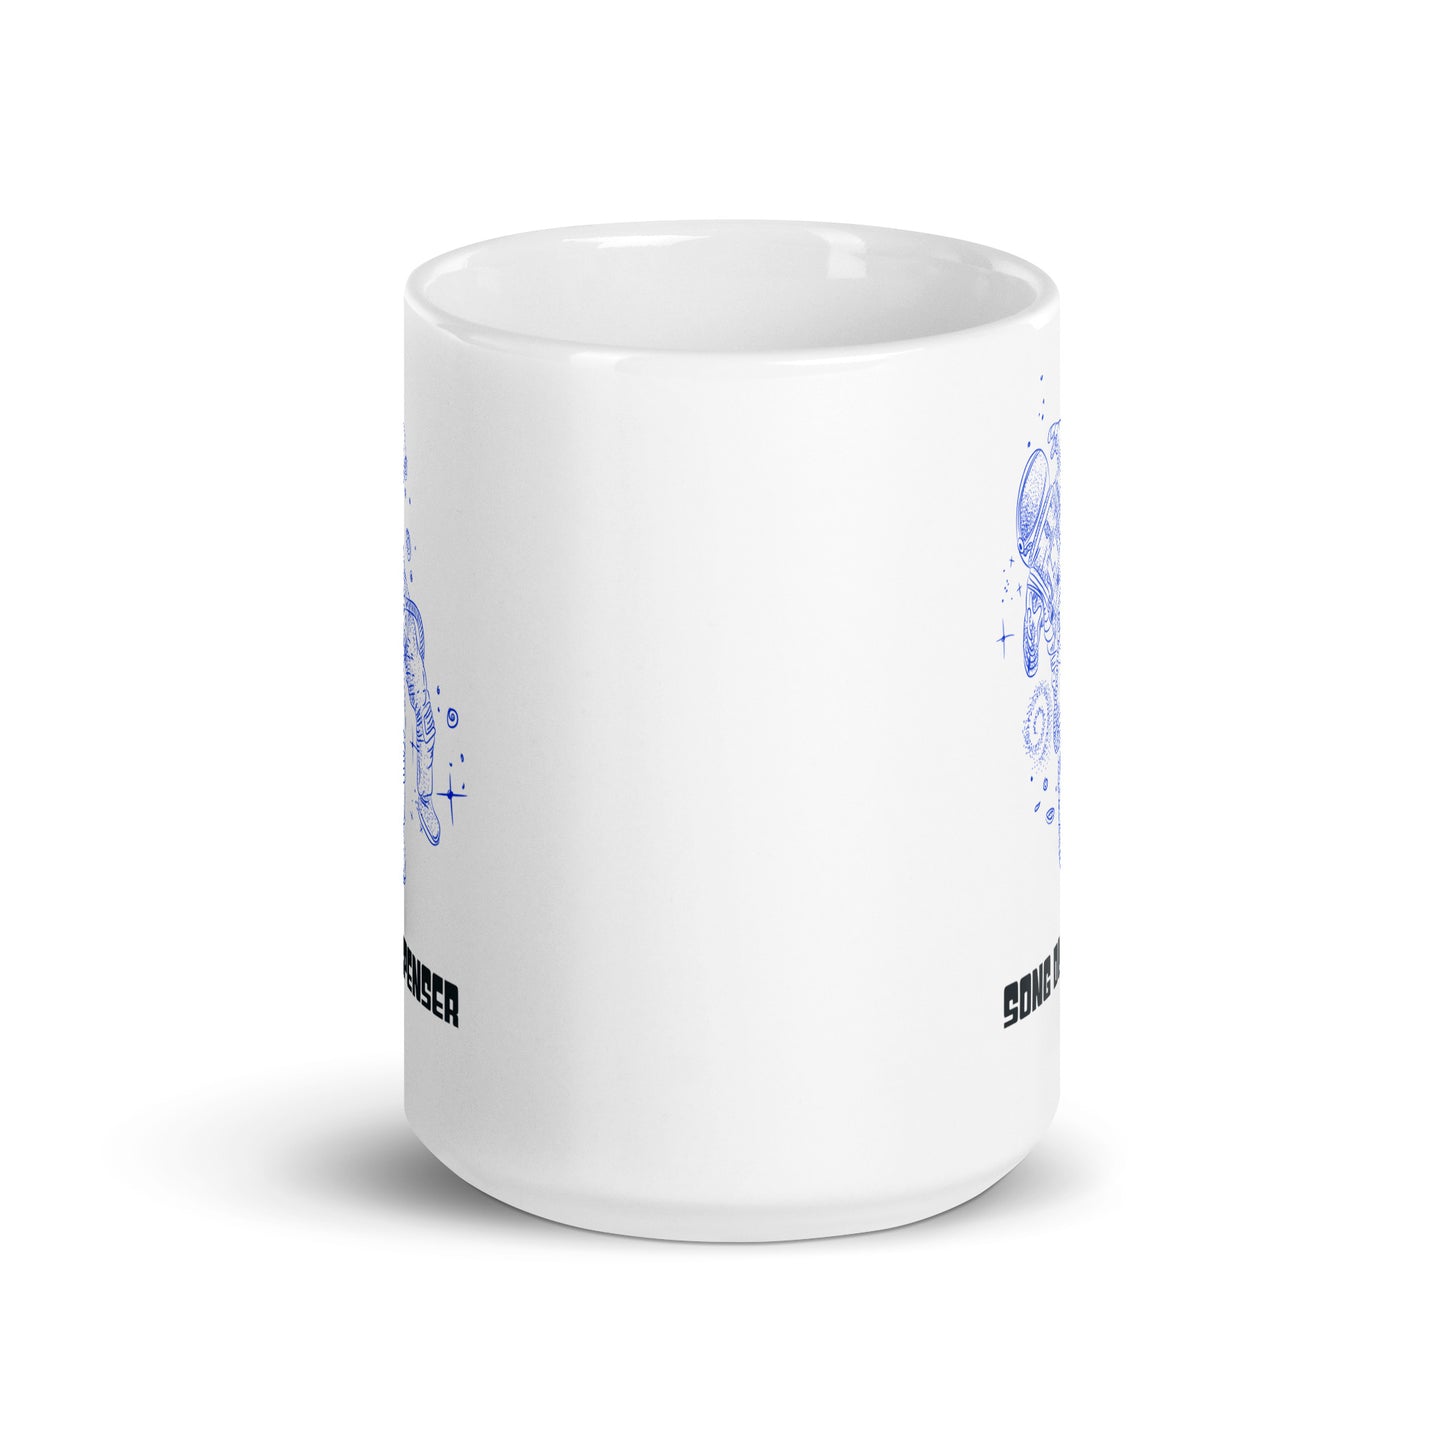 Song Dispenser Spaceman White Glossy Mug